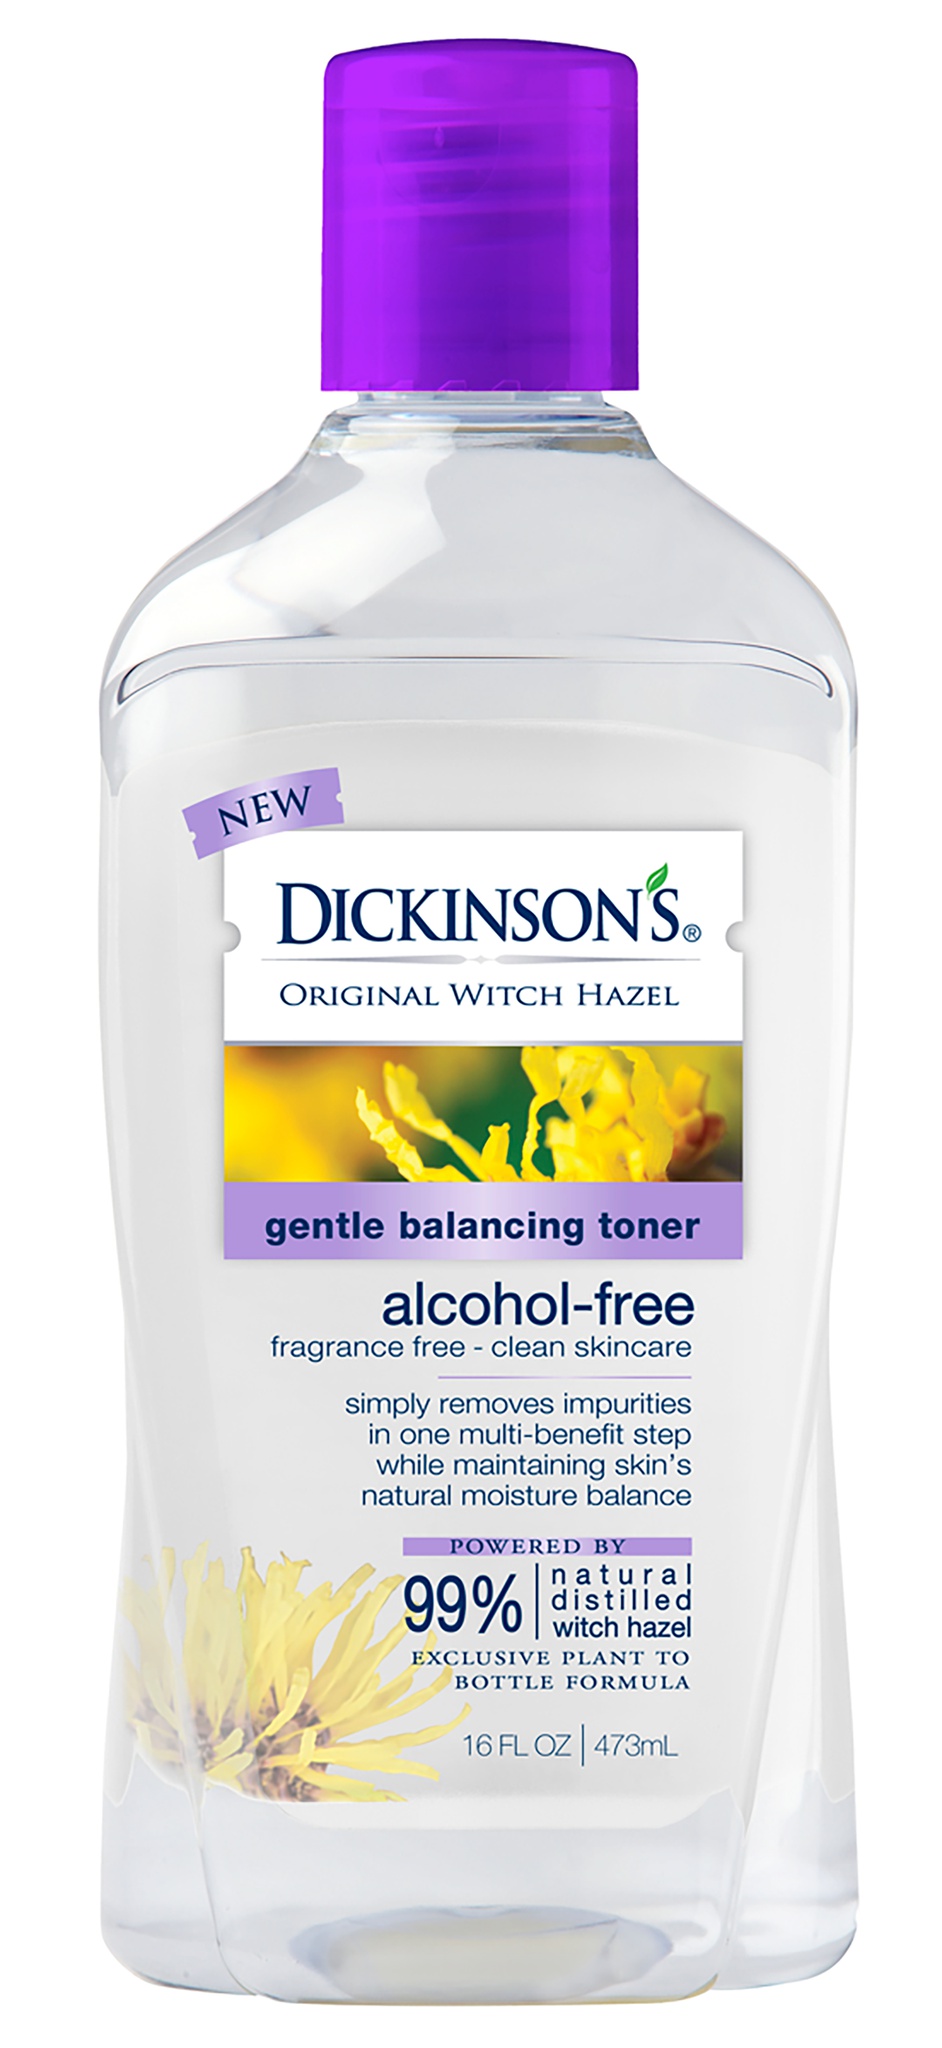 Dickinson’s Original Witch Hazel Gentle Balancing Toner